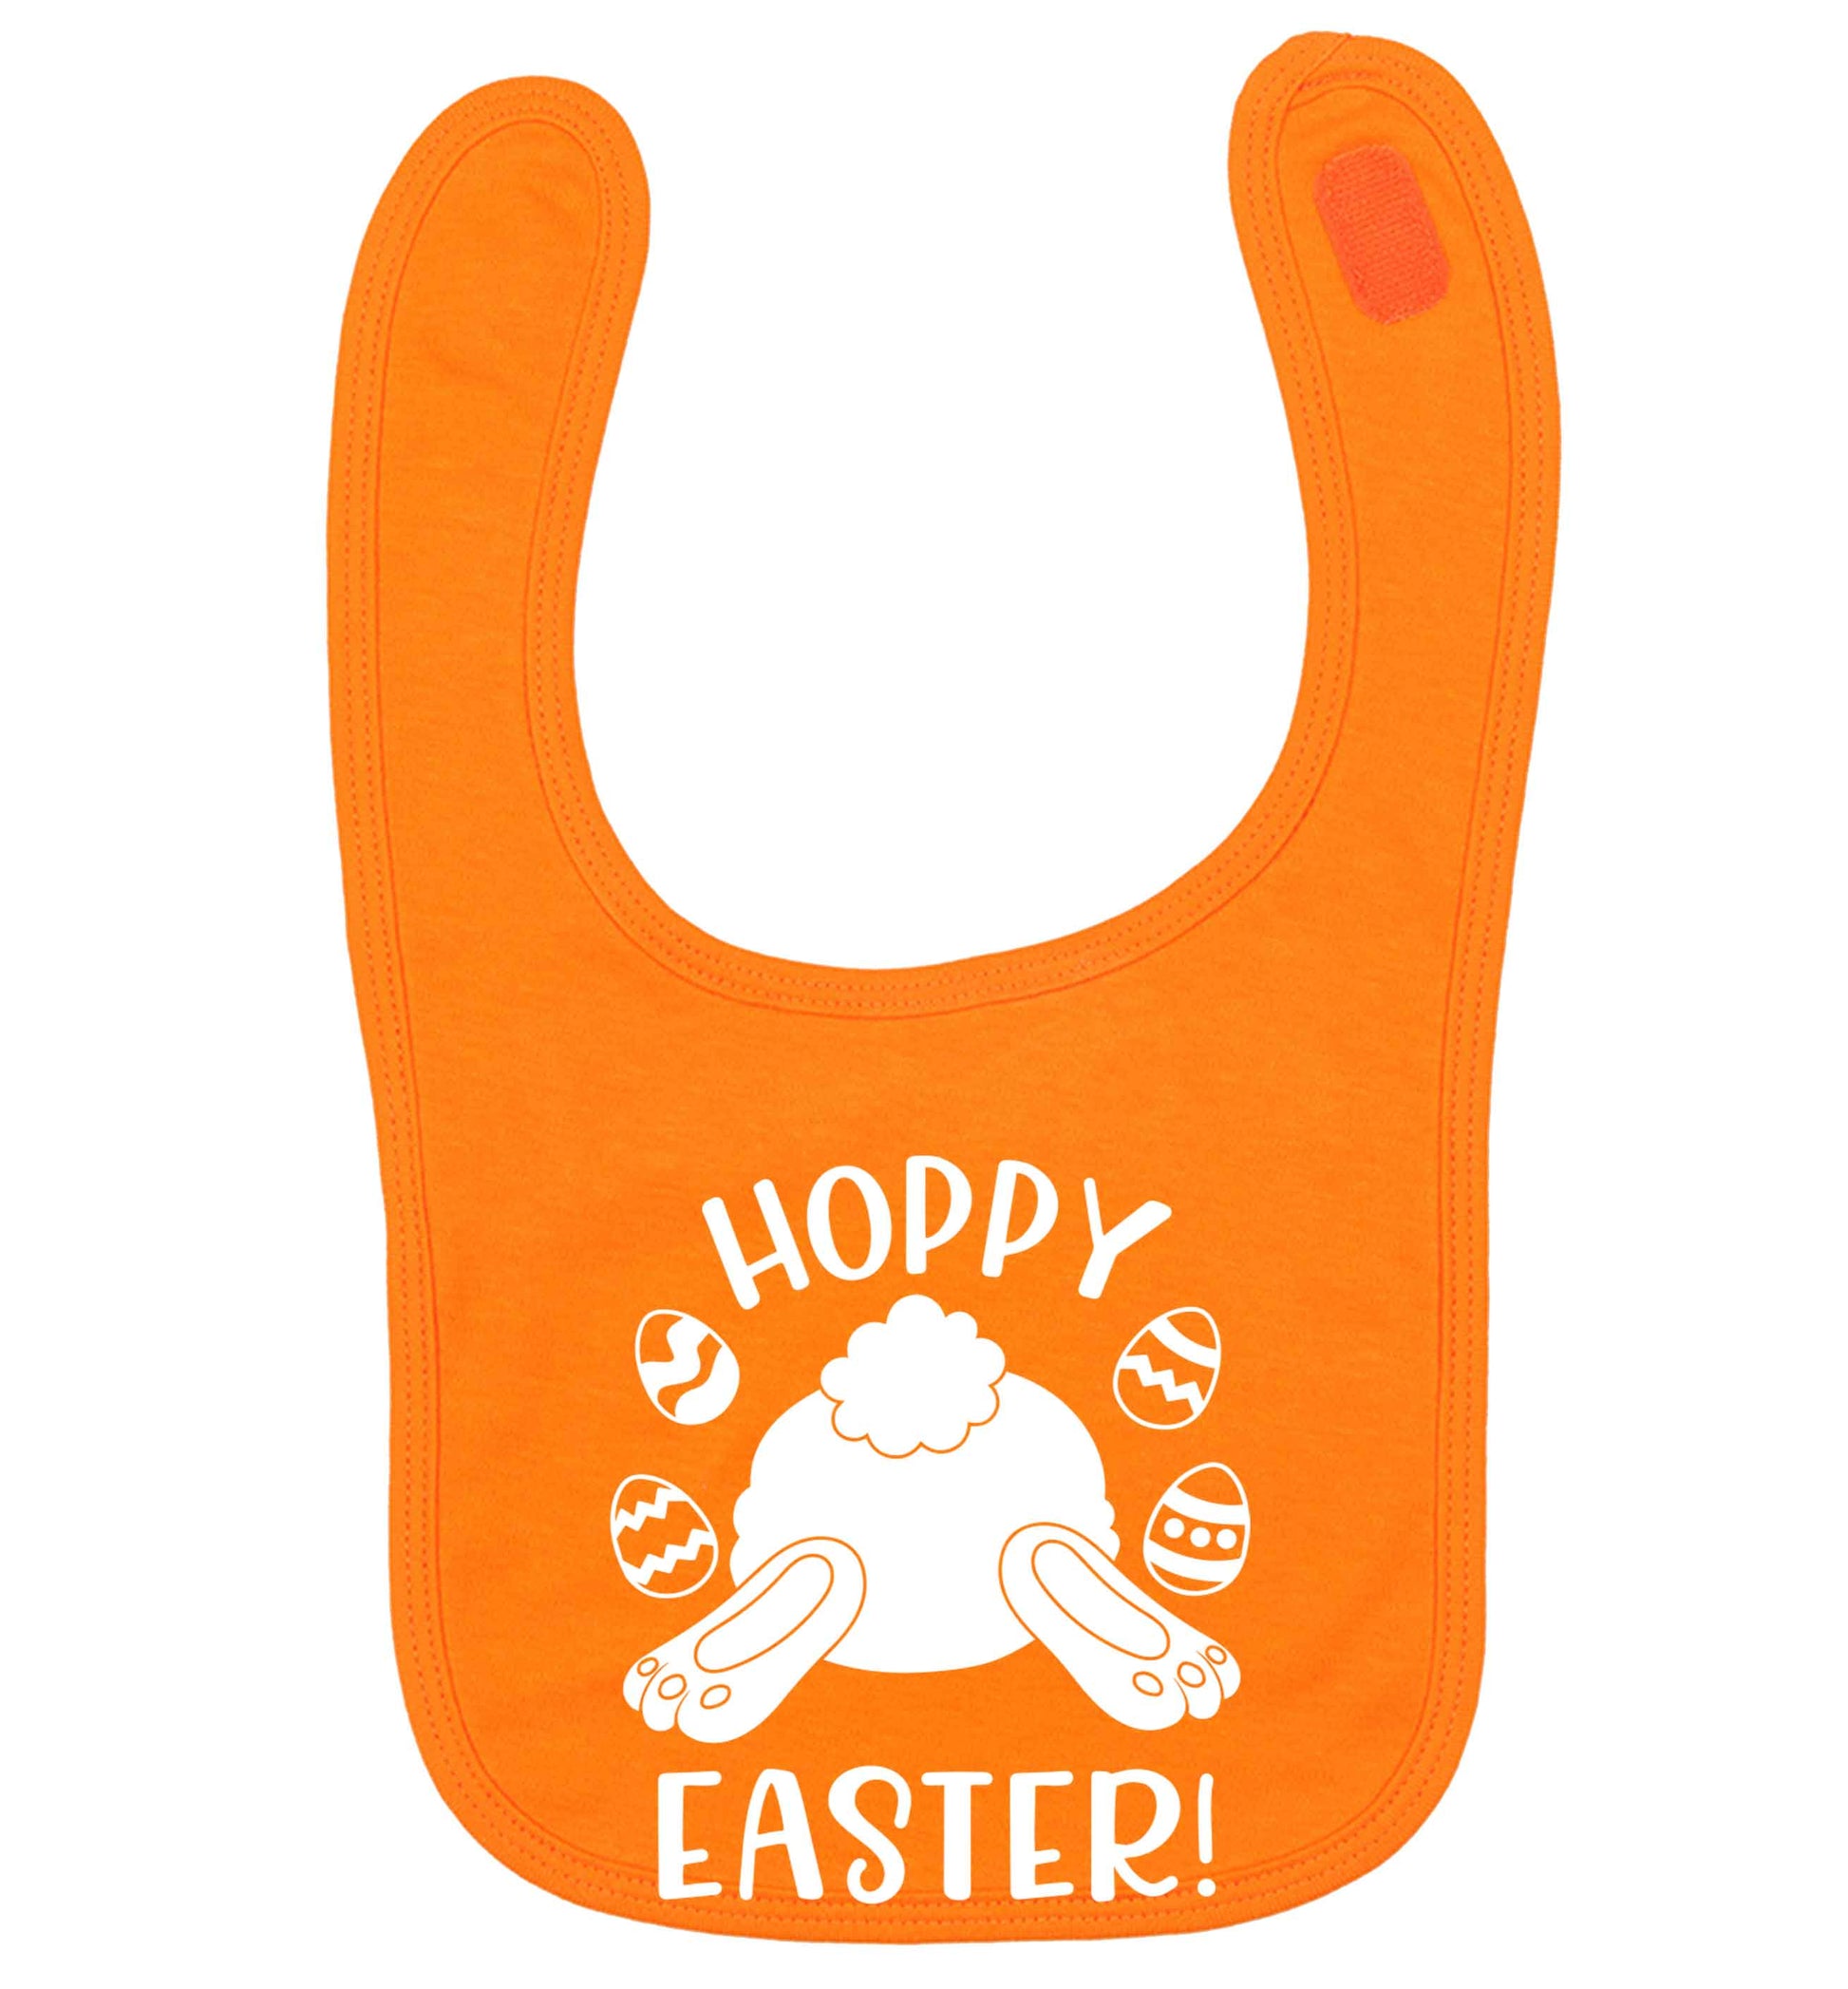 Hoppy Easter orange baby bib